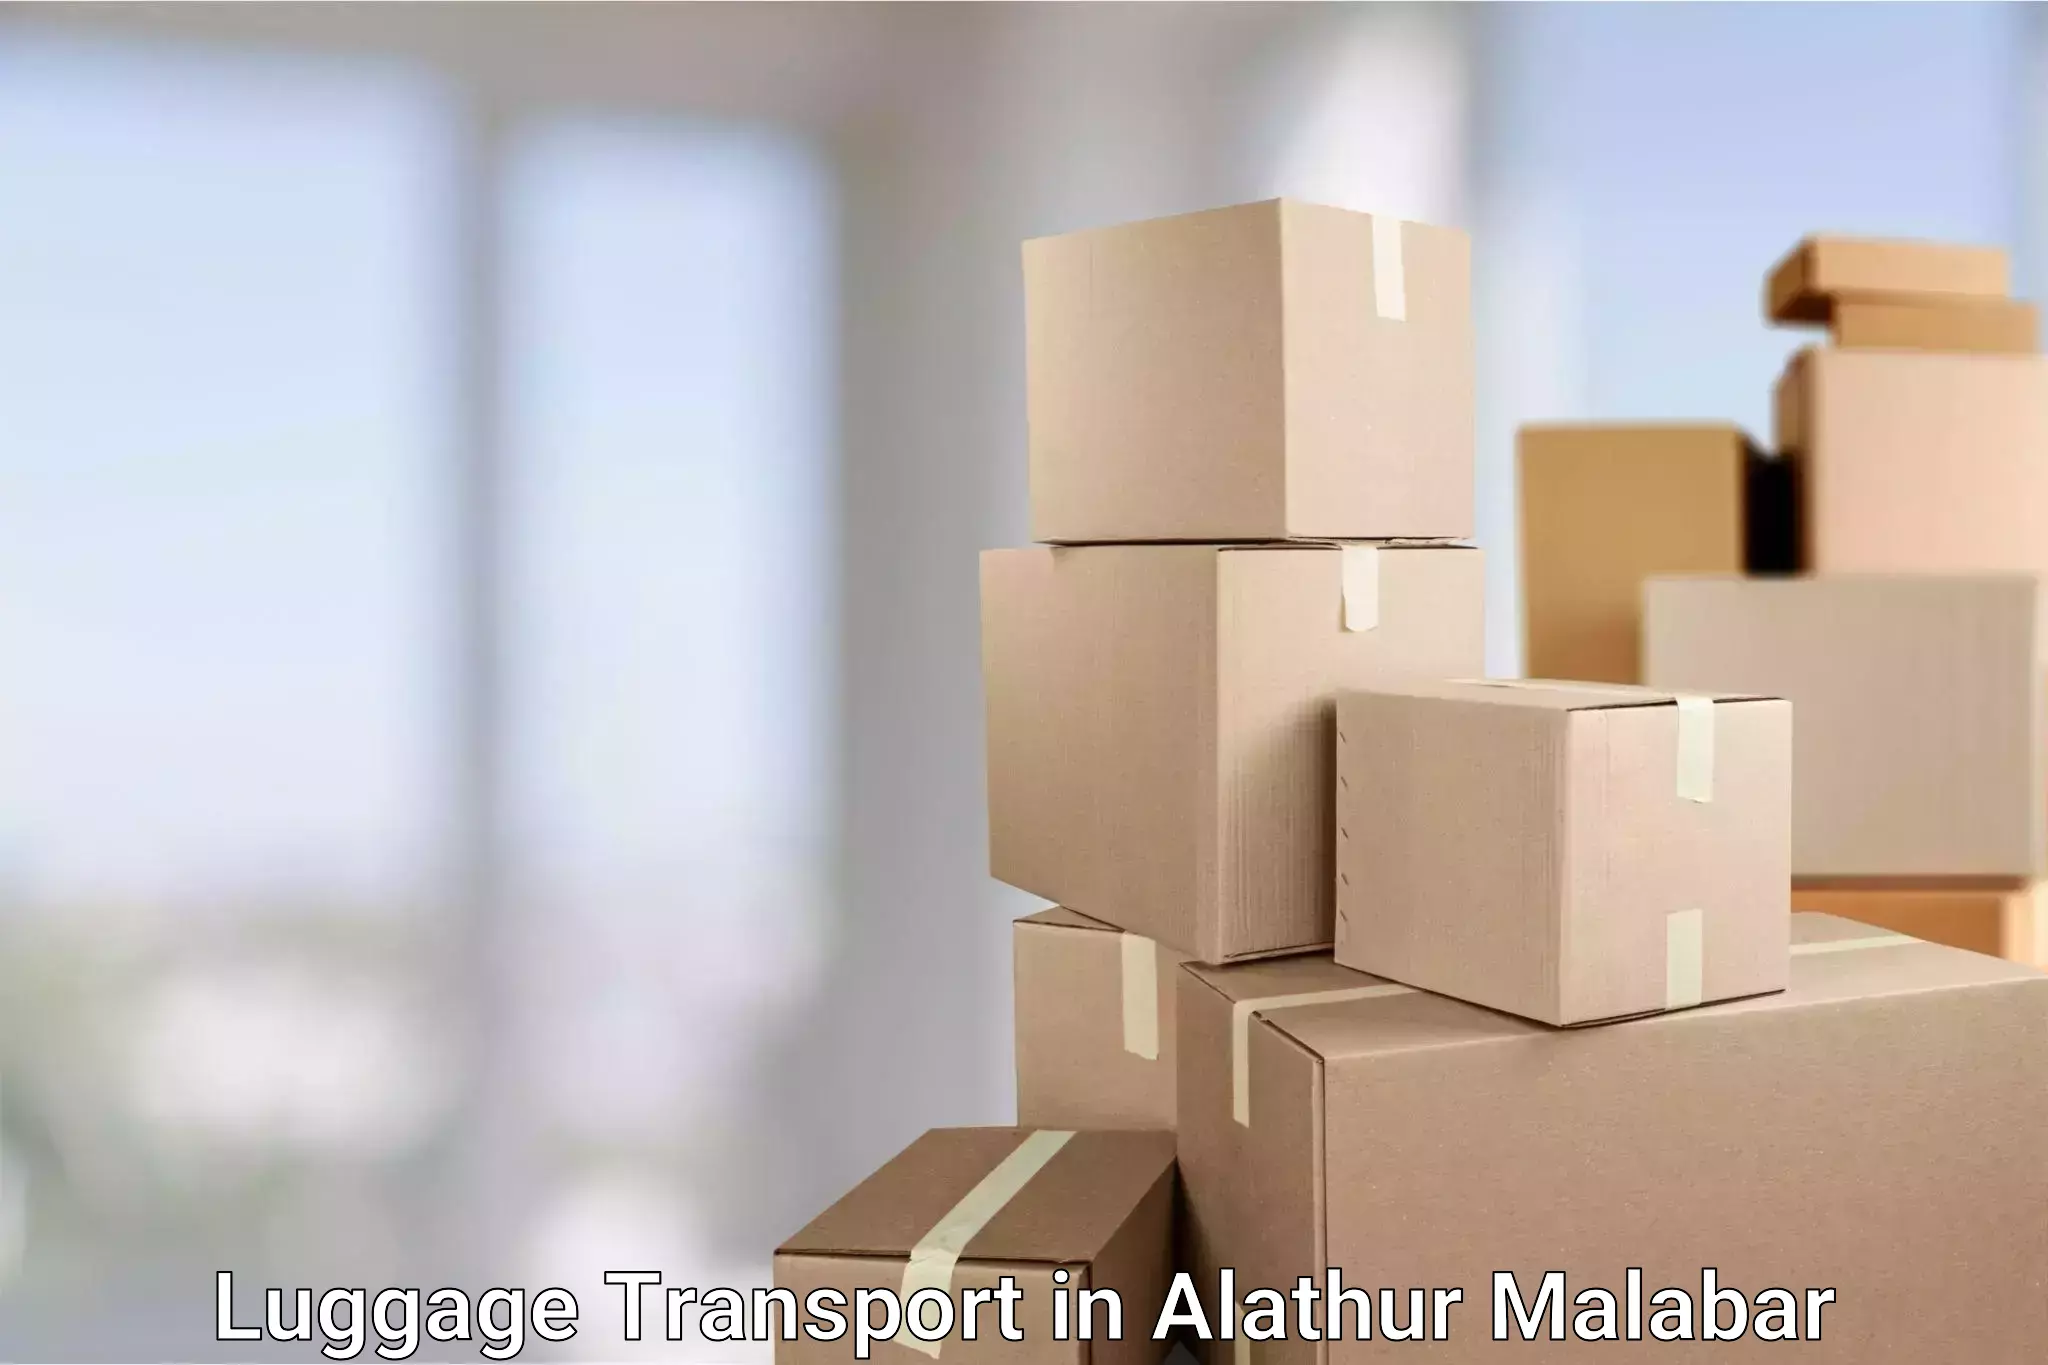 Domestic luggage transport in Alathur Malabar